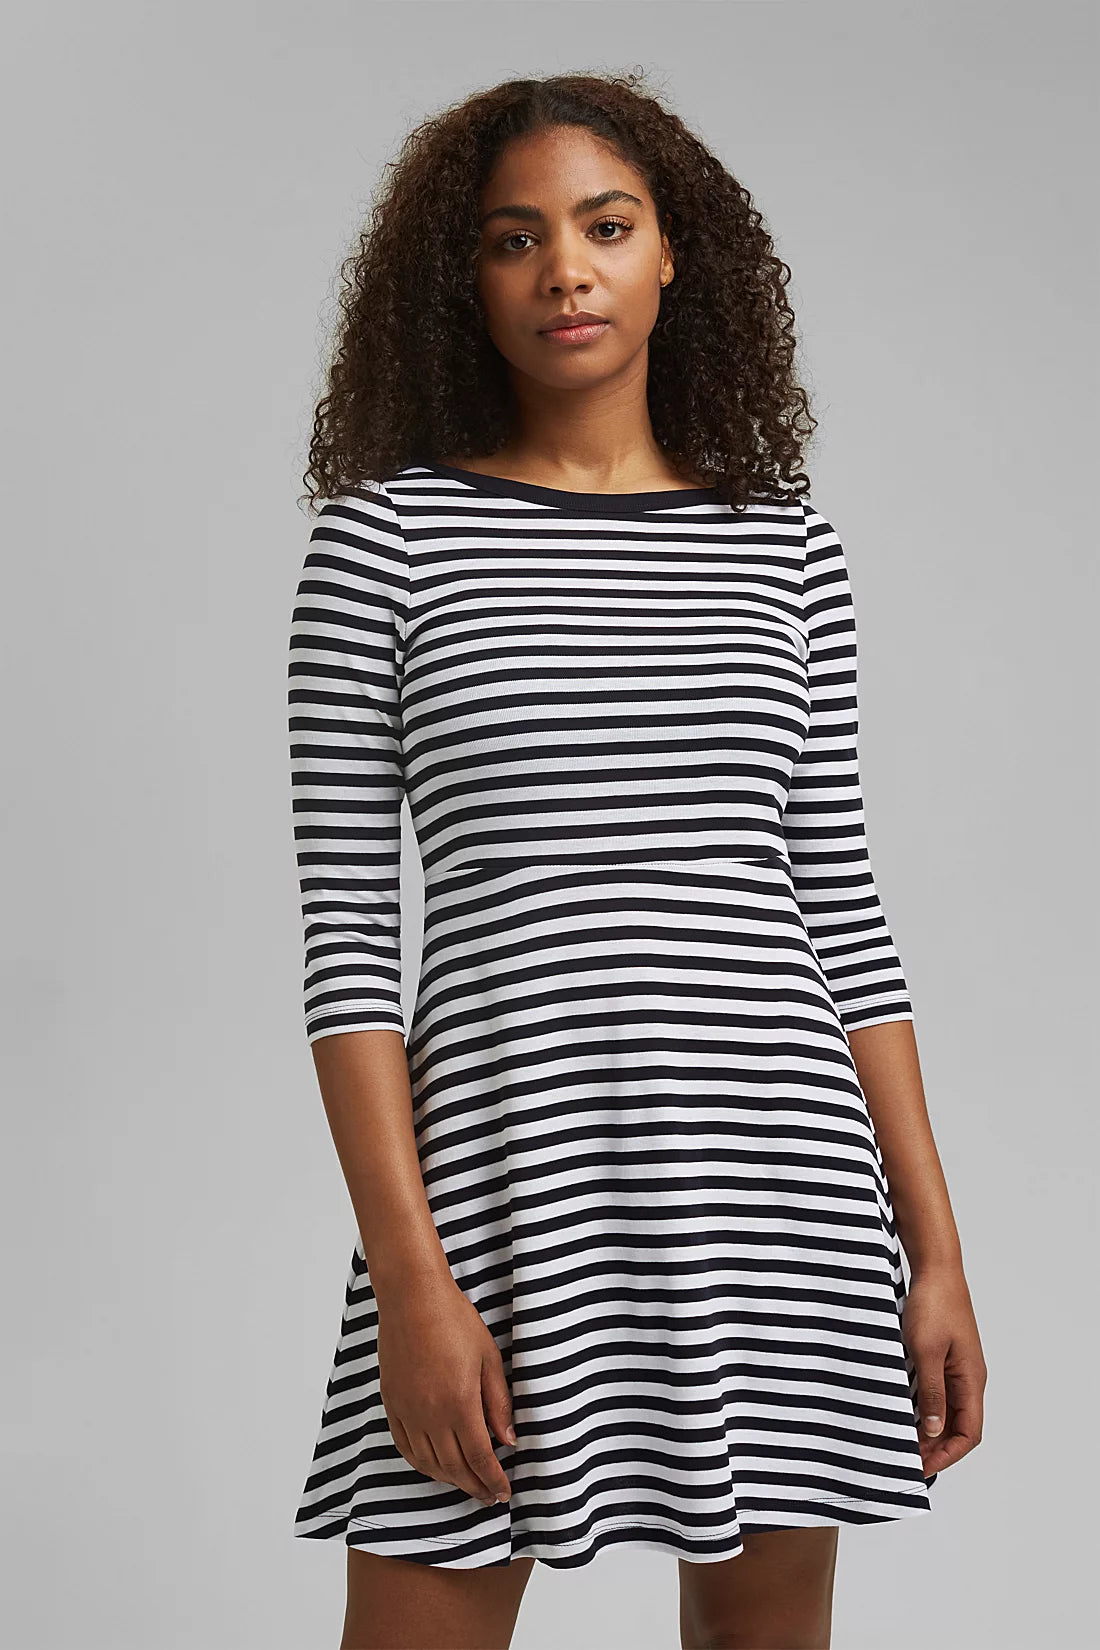 Esprit - Long Sleeve Striped Dress